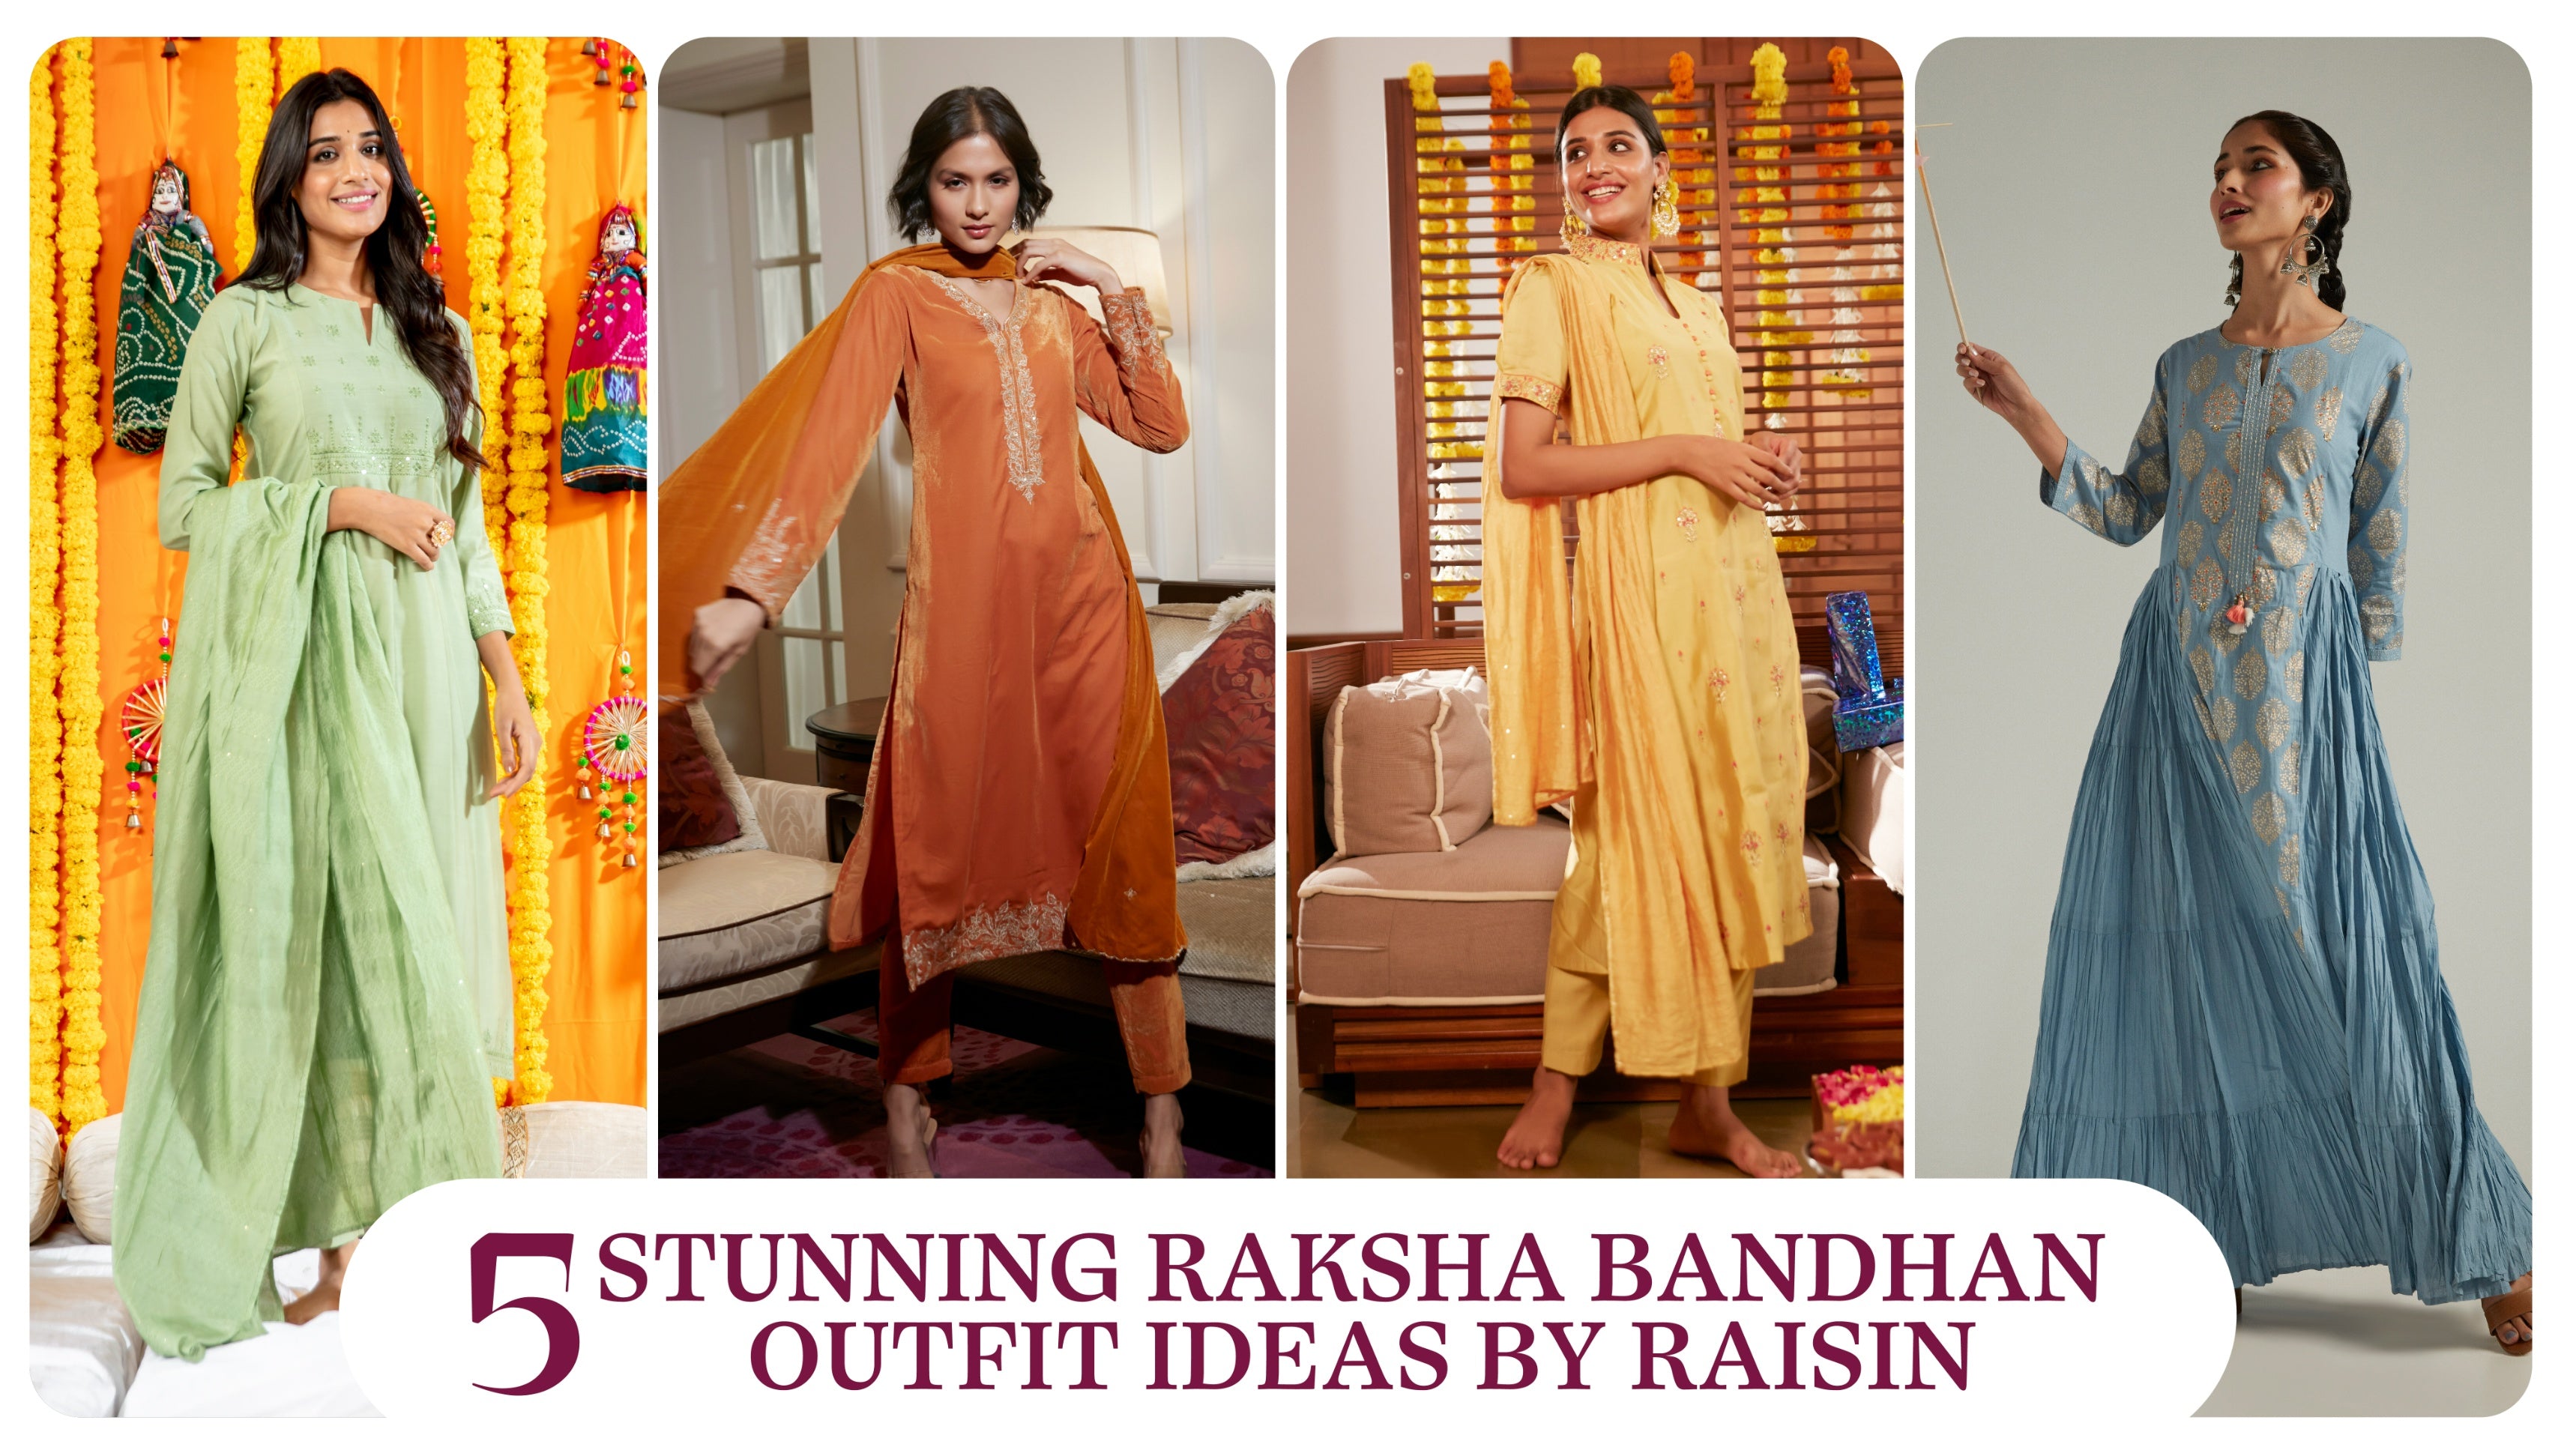 5 Stunning Raksha Bandhan Outfit Ideas By Raisin